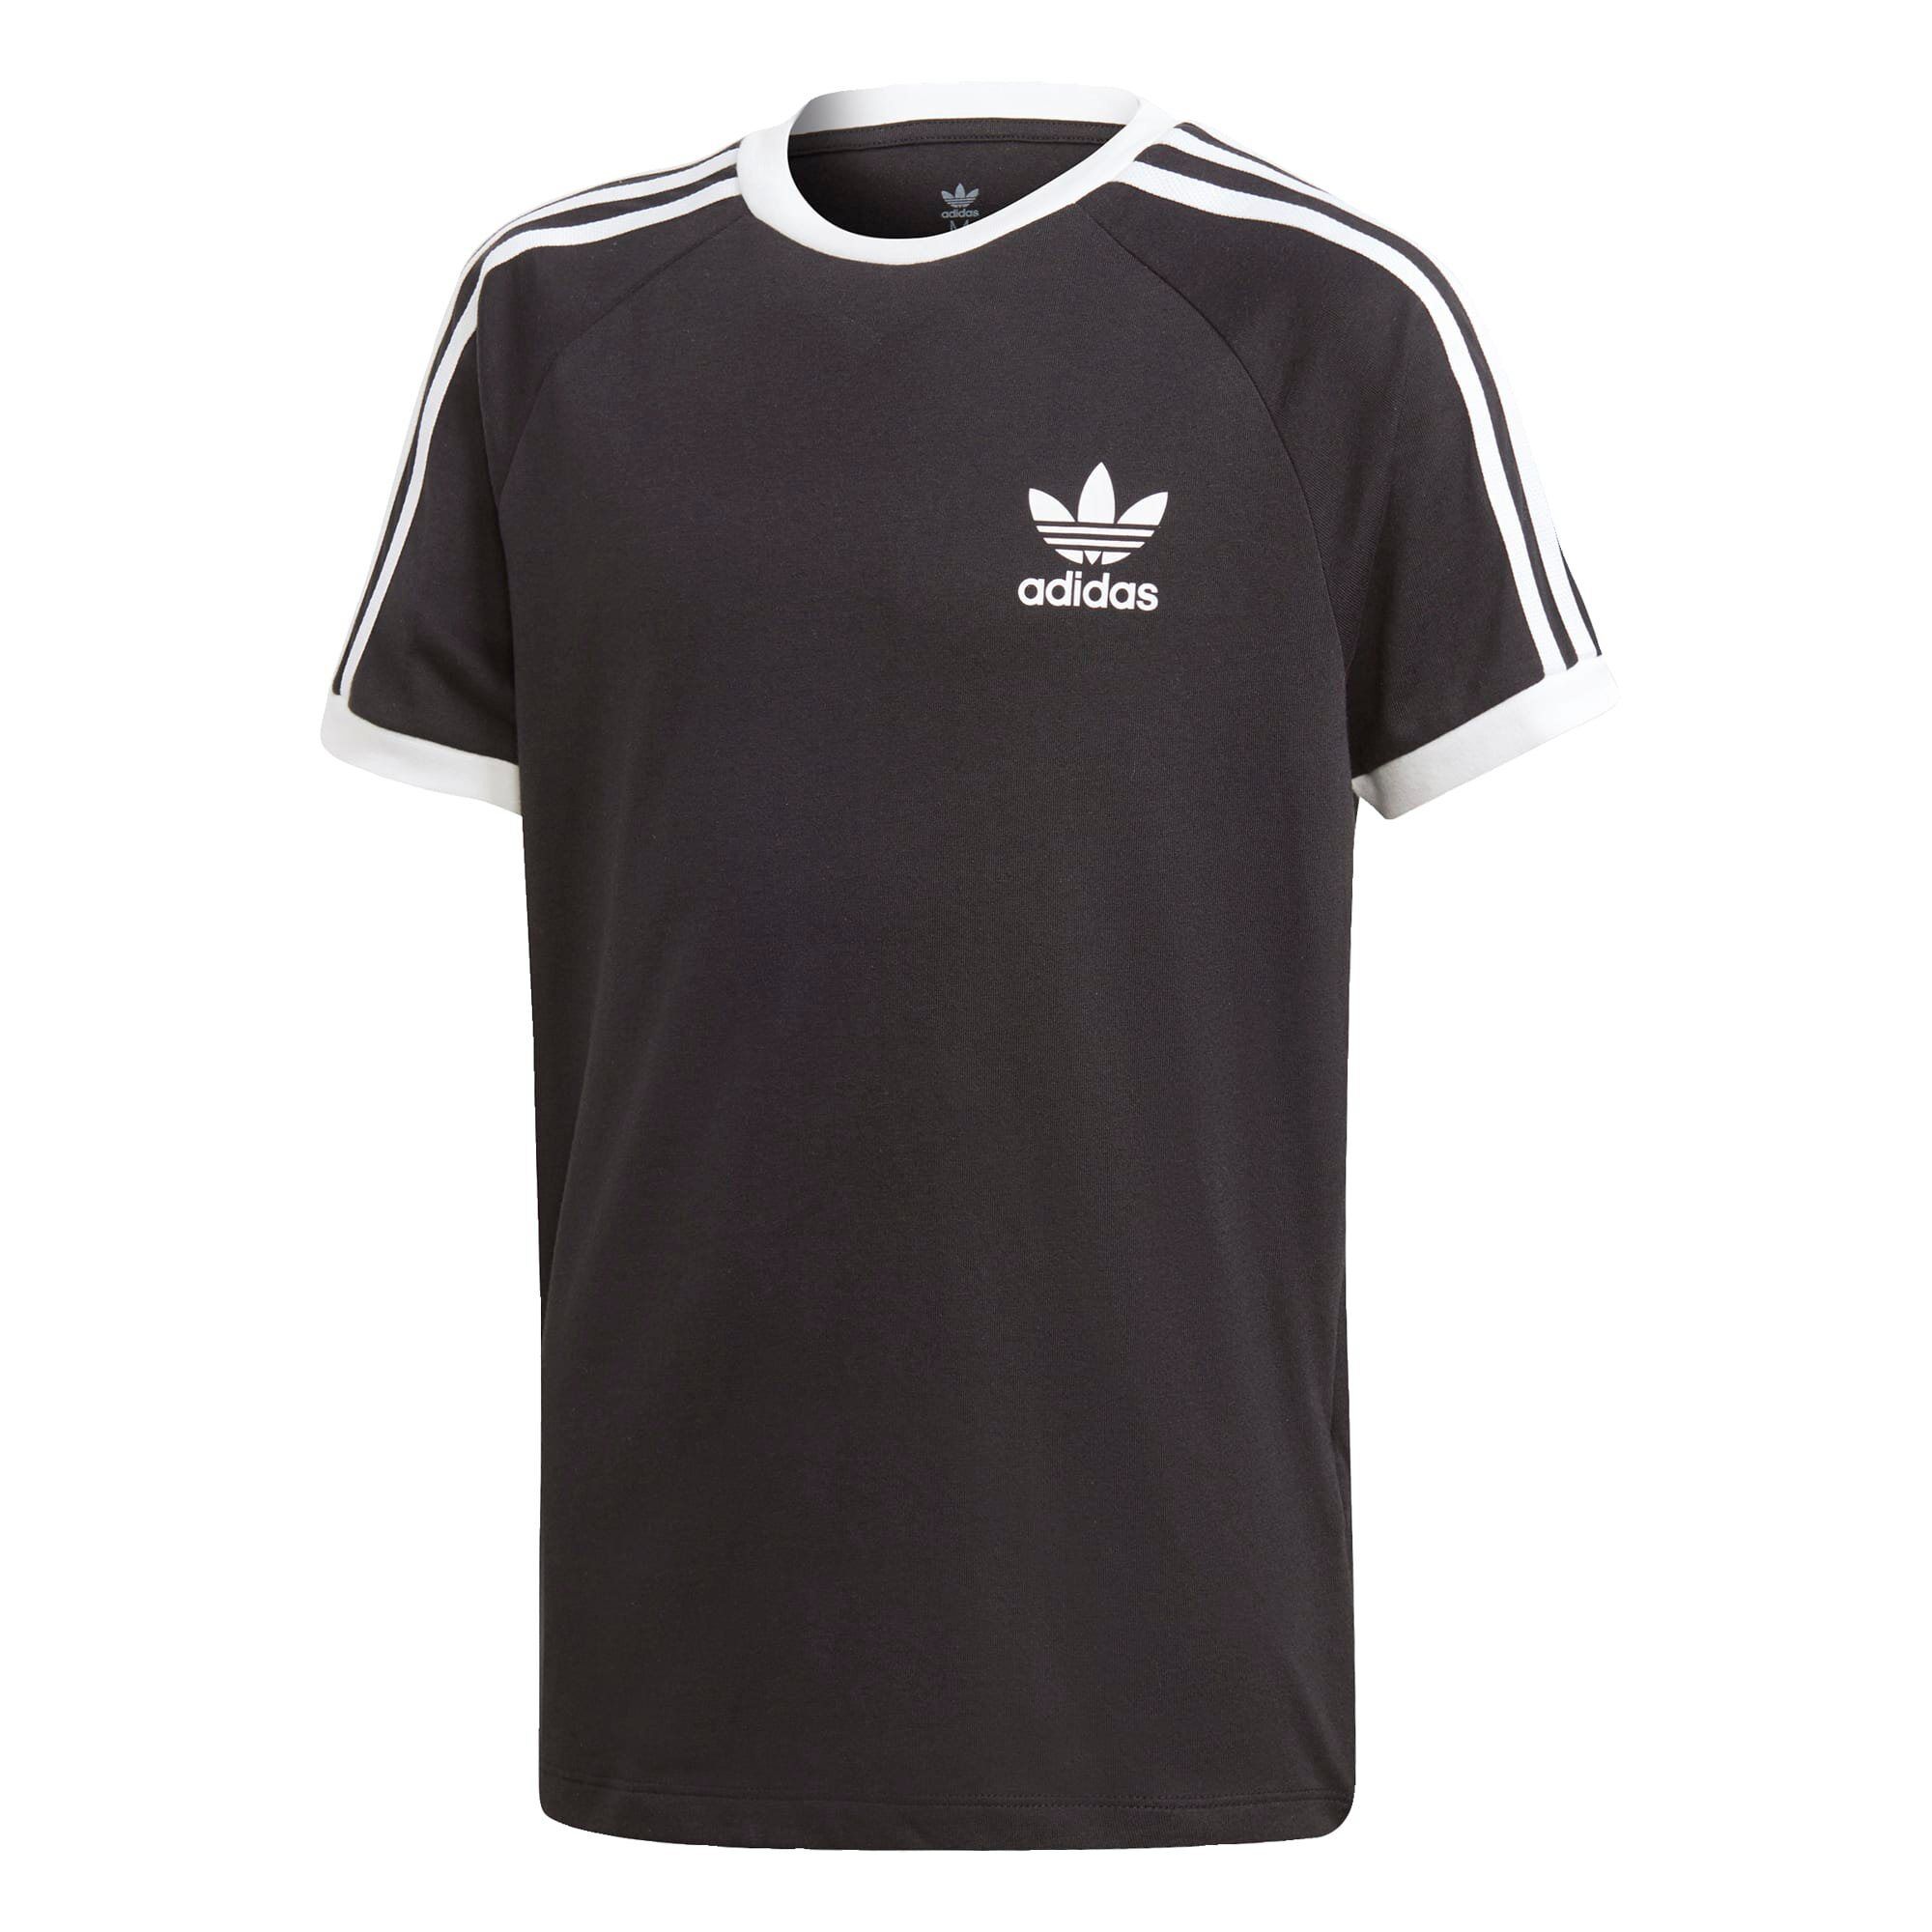 Adidas Originals T-Shirt, schwarz